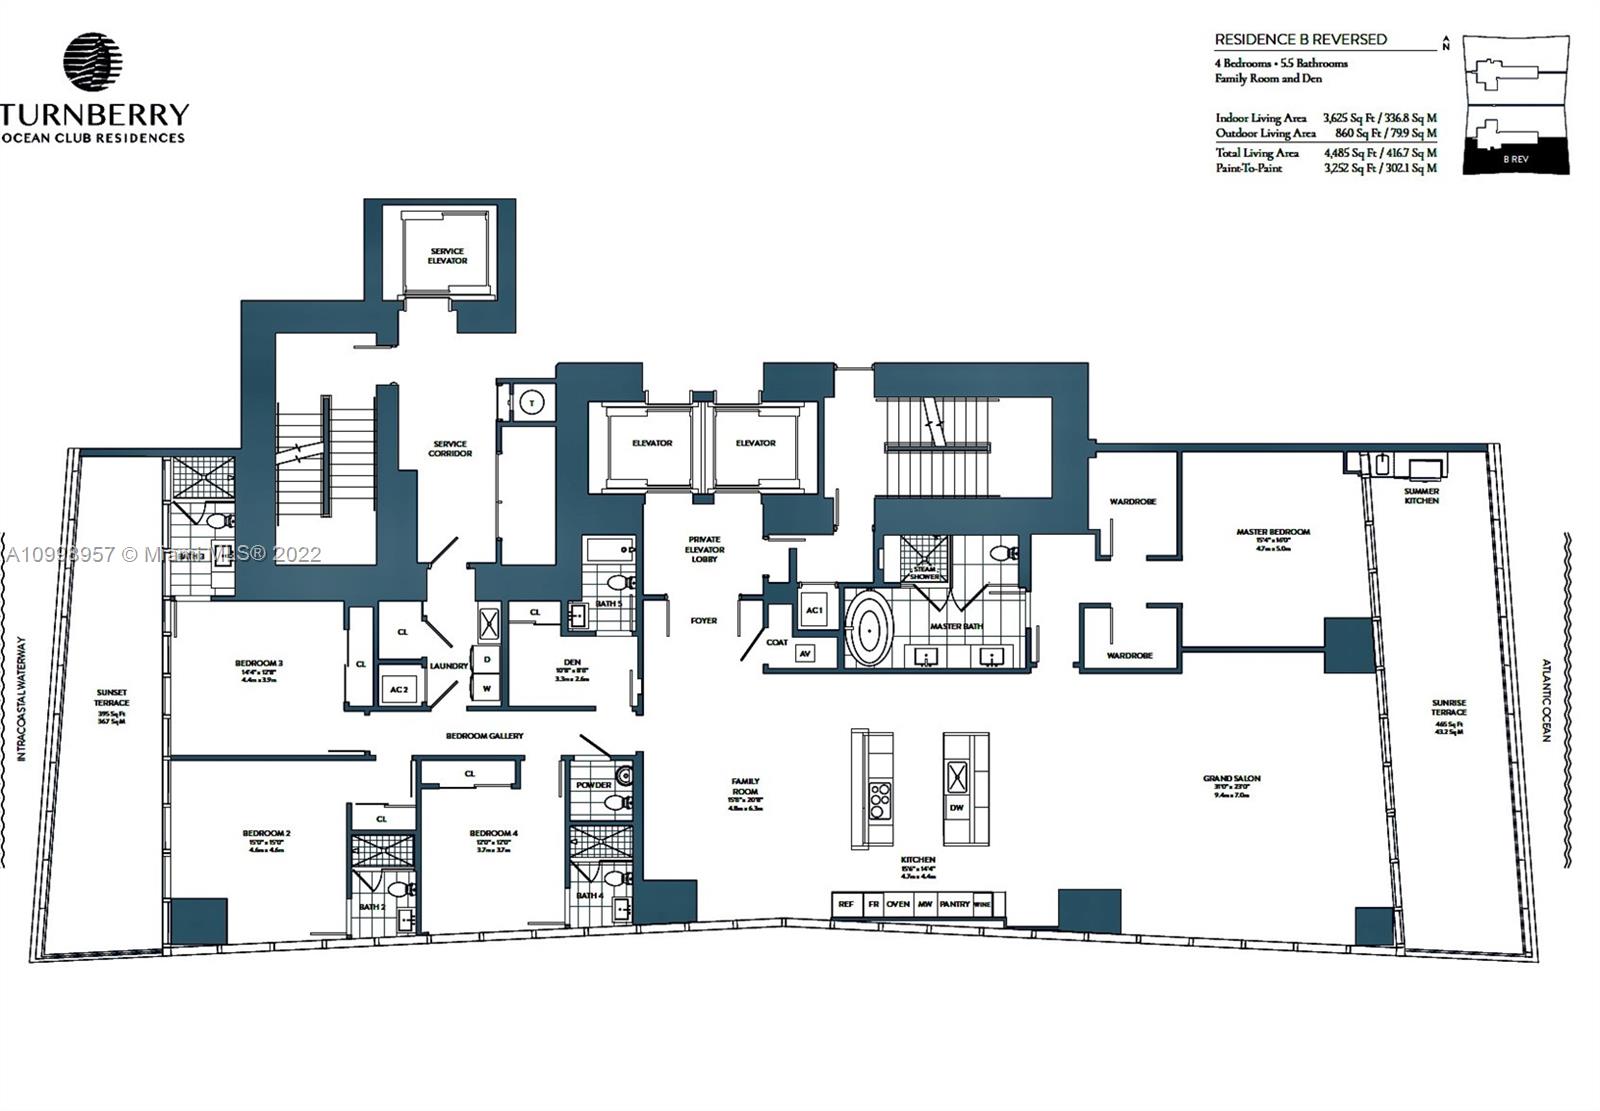 Unit 1804 floor plan